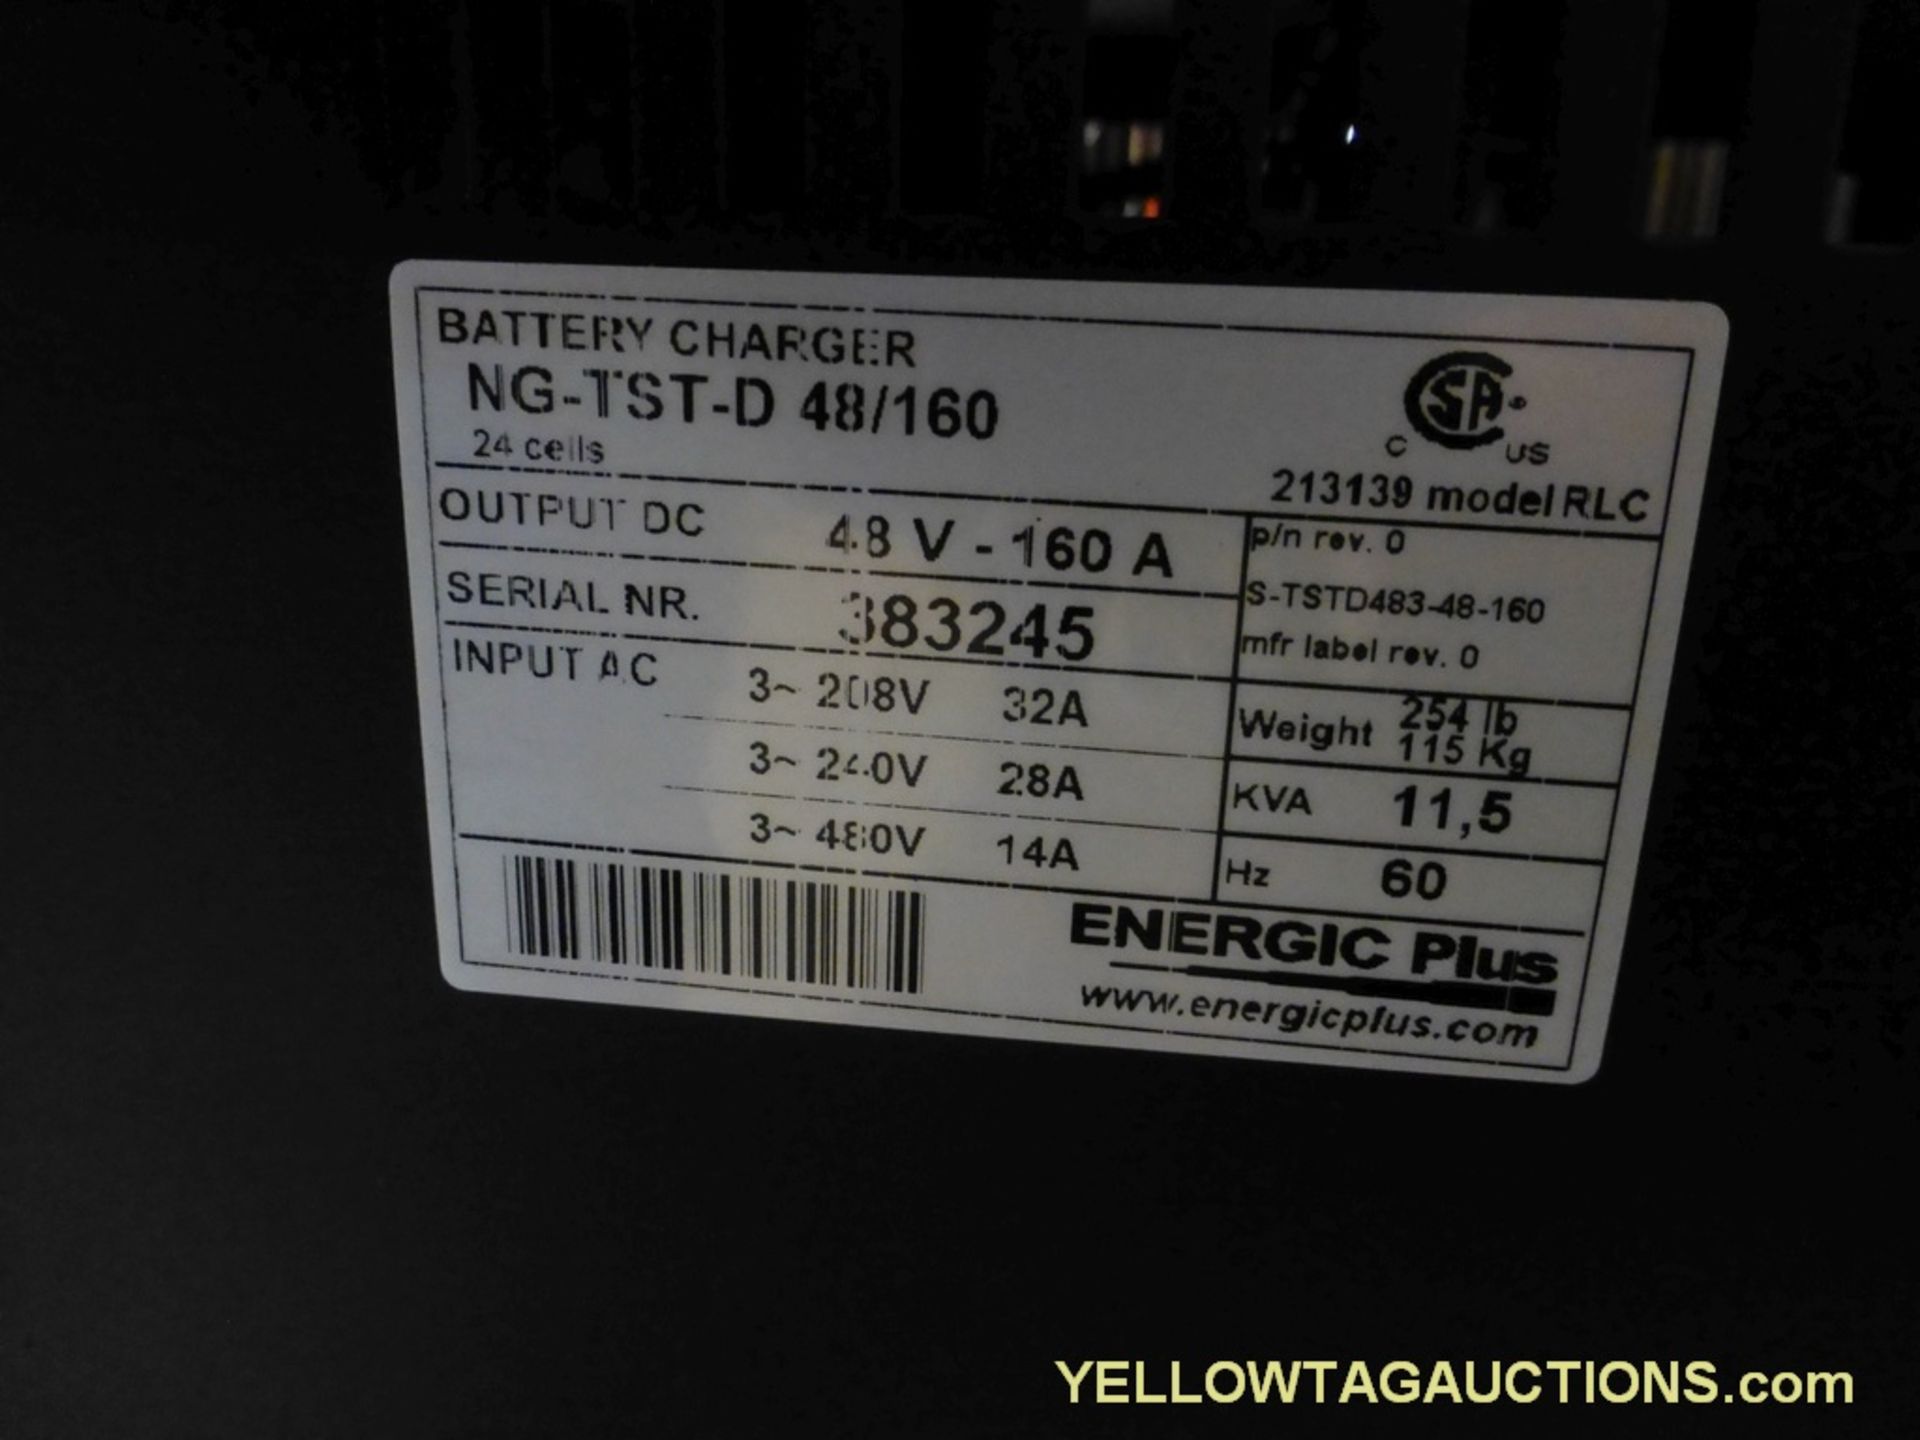 Energy Plus Battery Charger | Model No. 213139; Model: RLC; Part No. NG-TST-D 481160; Serial No. 383 - Image 9 of 9